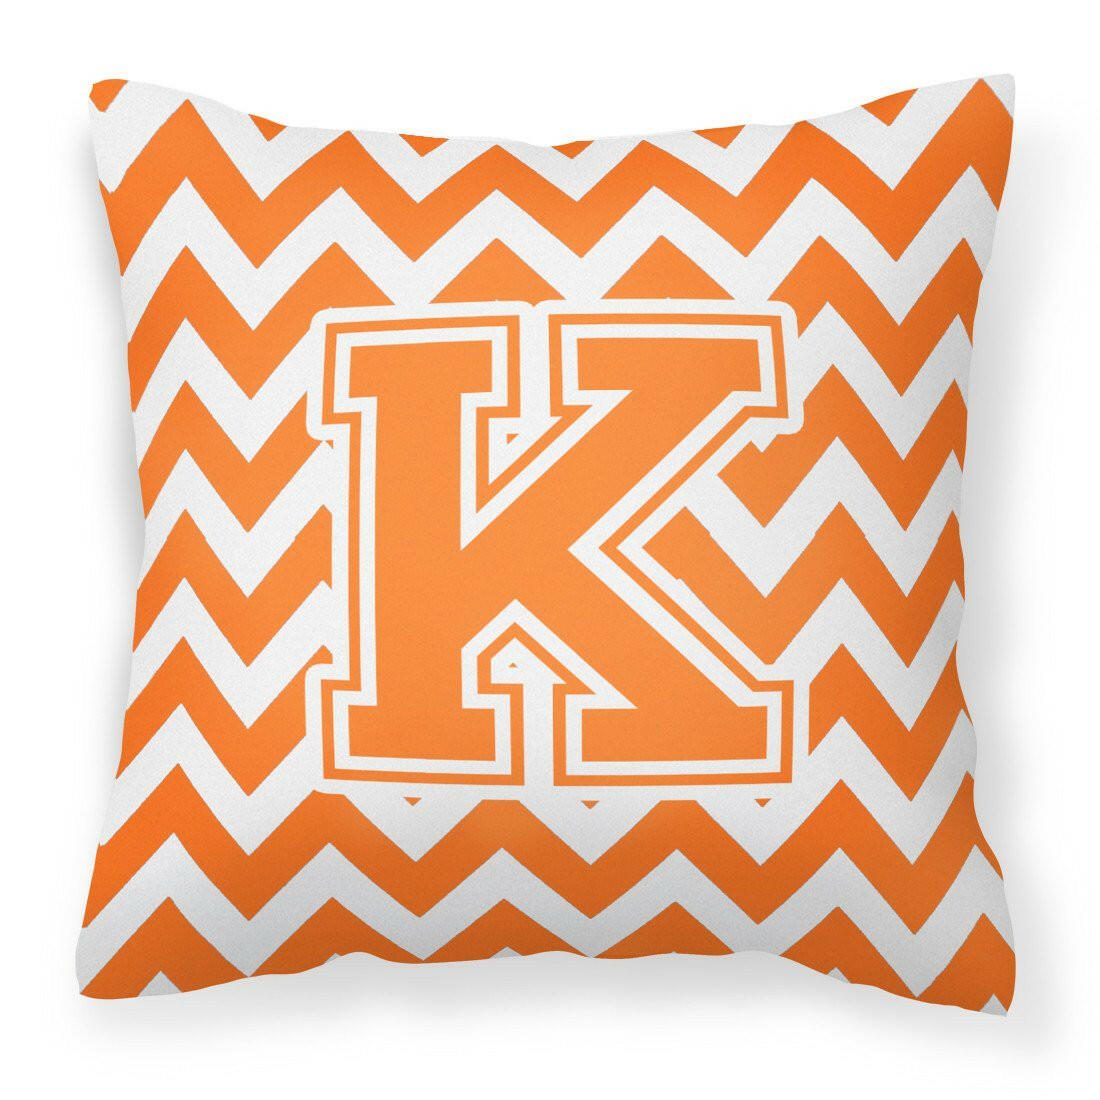 Letter K Chevron Orange and White Fabric Decorative Pillow CJ1046-KPW1414 by Caroline's Treasures